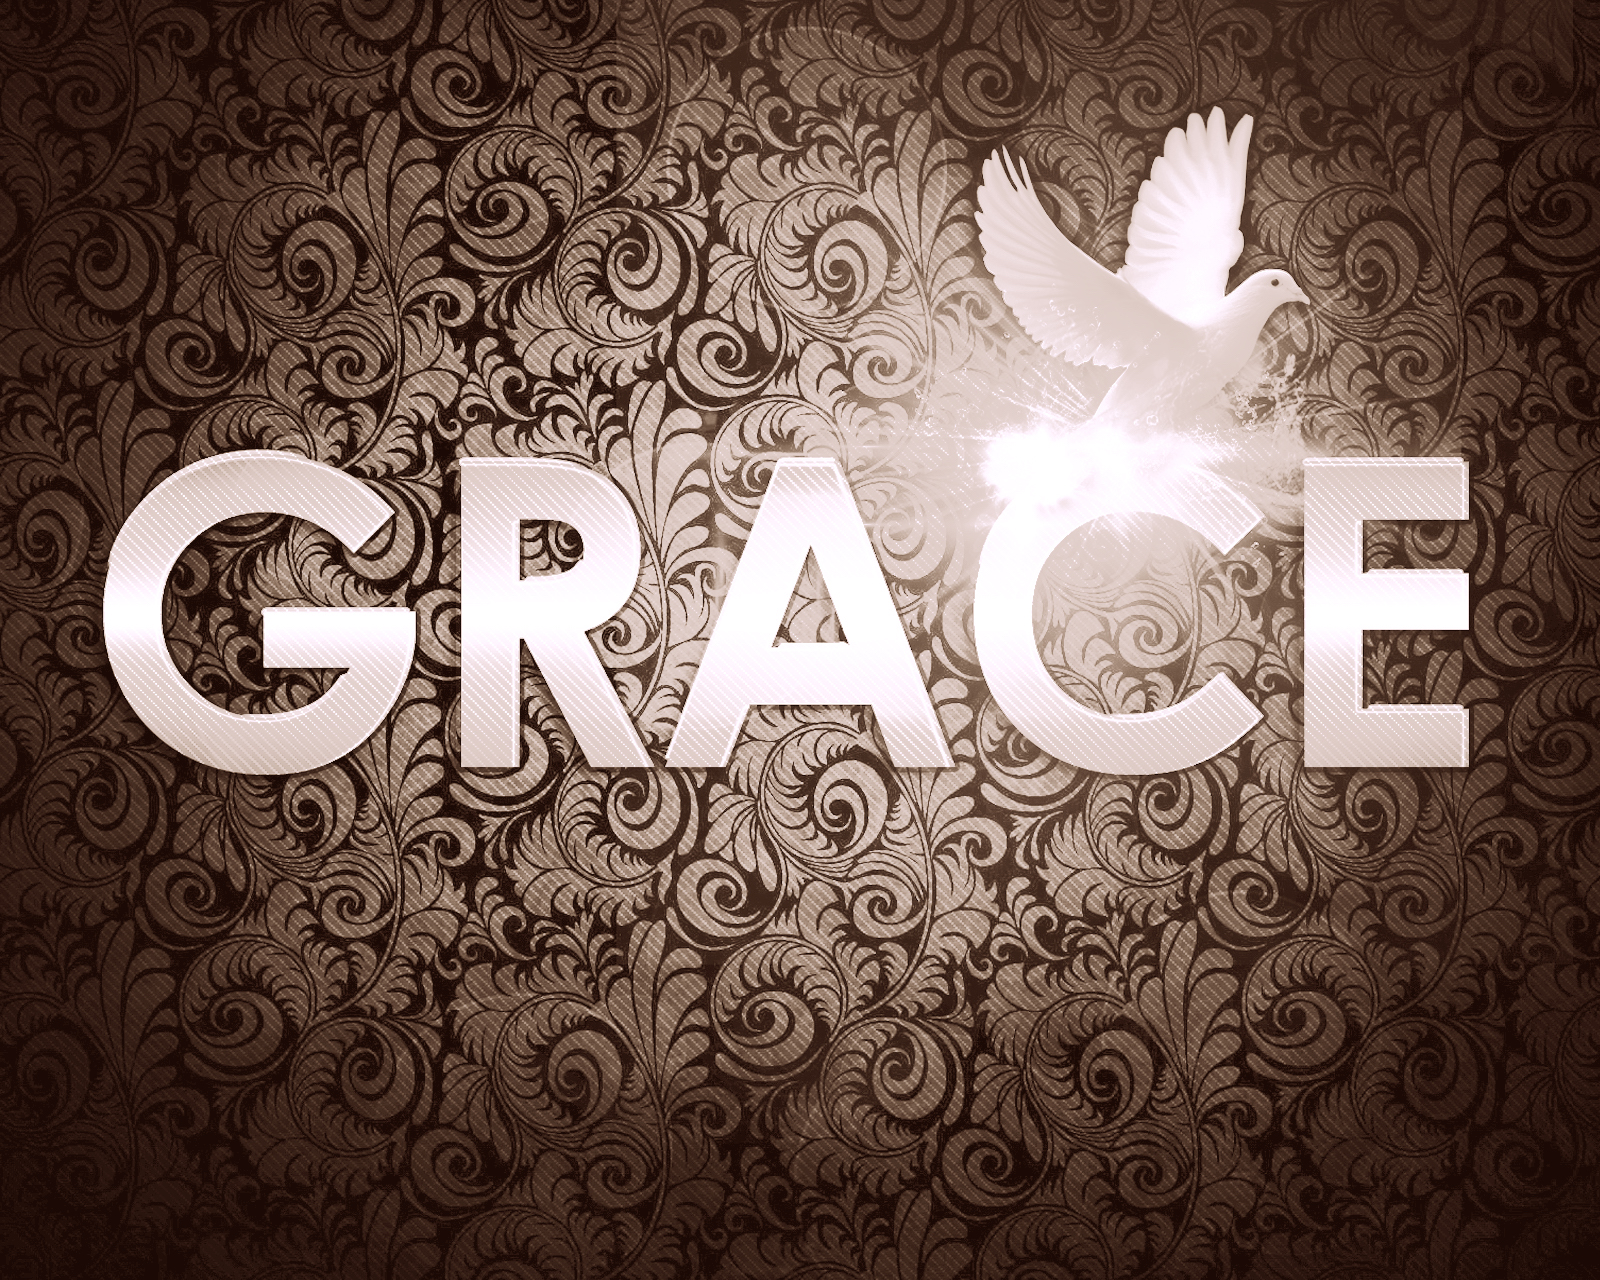 Aspects of Grace